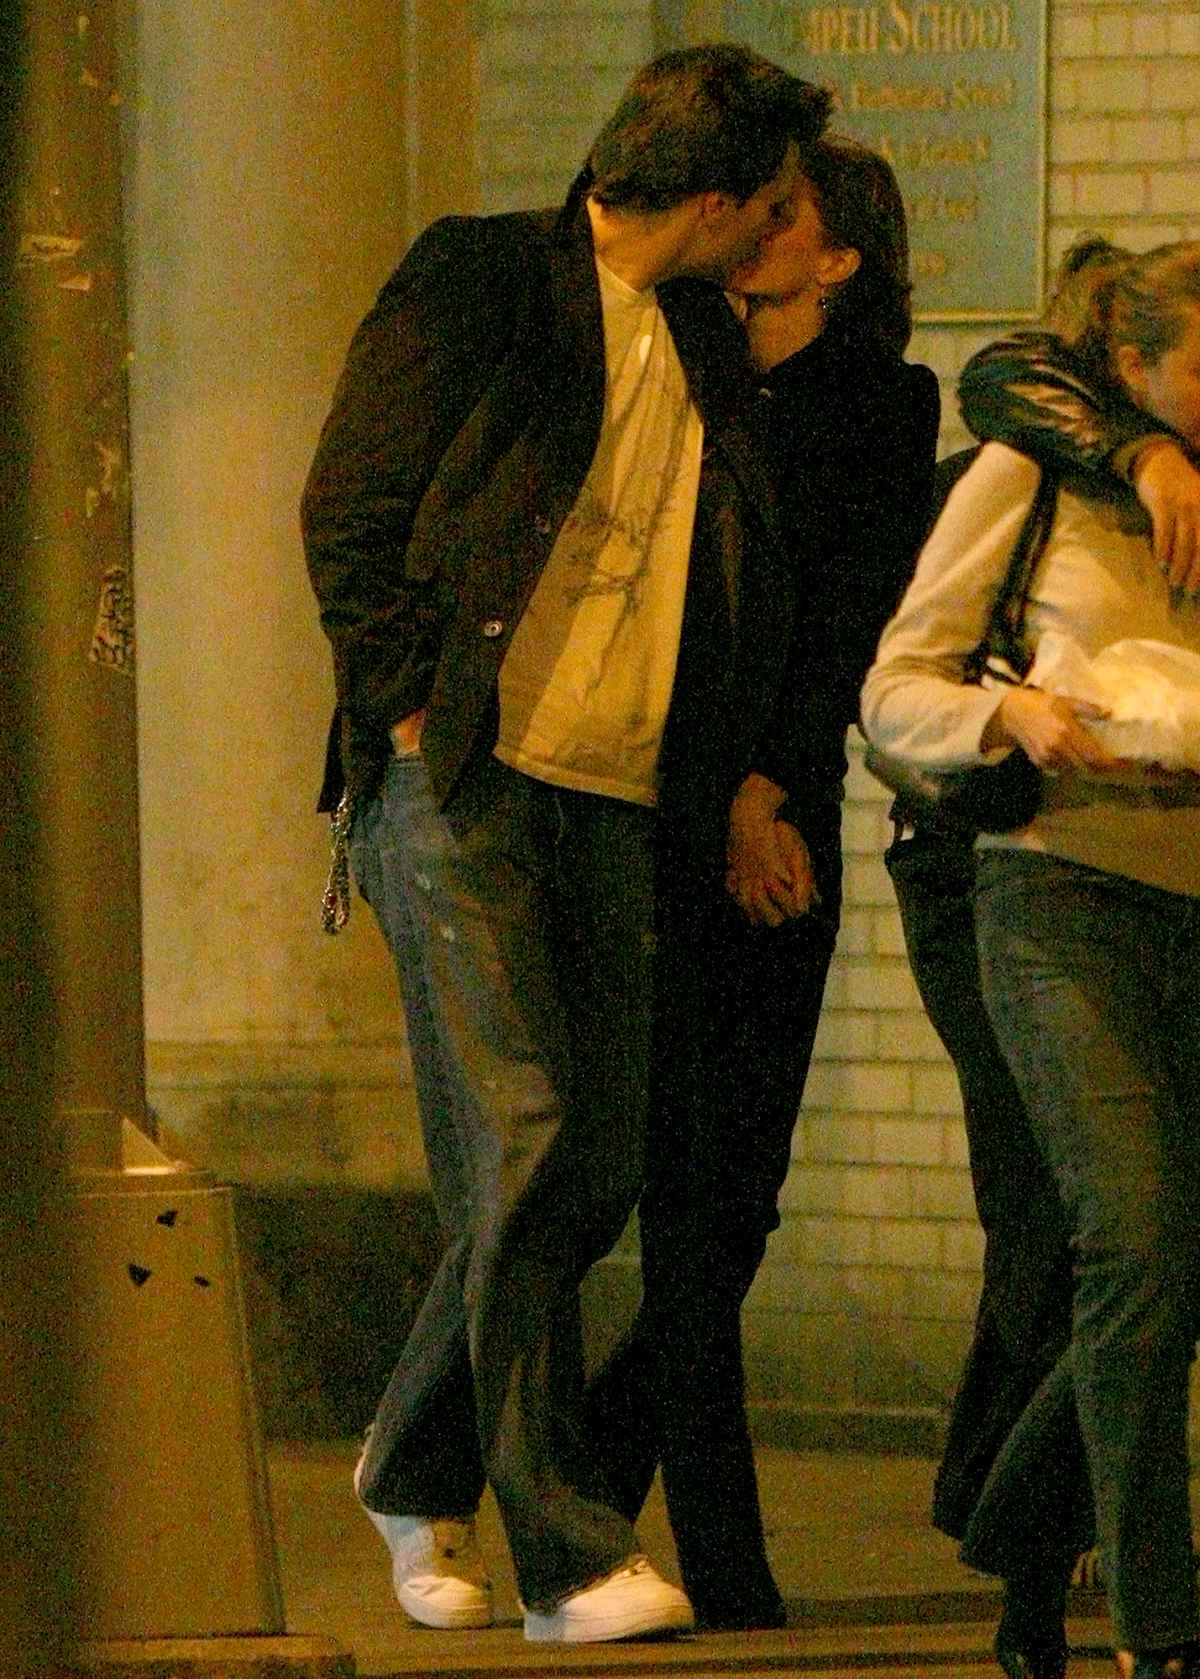 Tom Brady and Gisele Bundchen's Most Romantic Moments